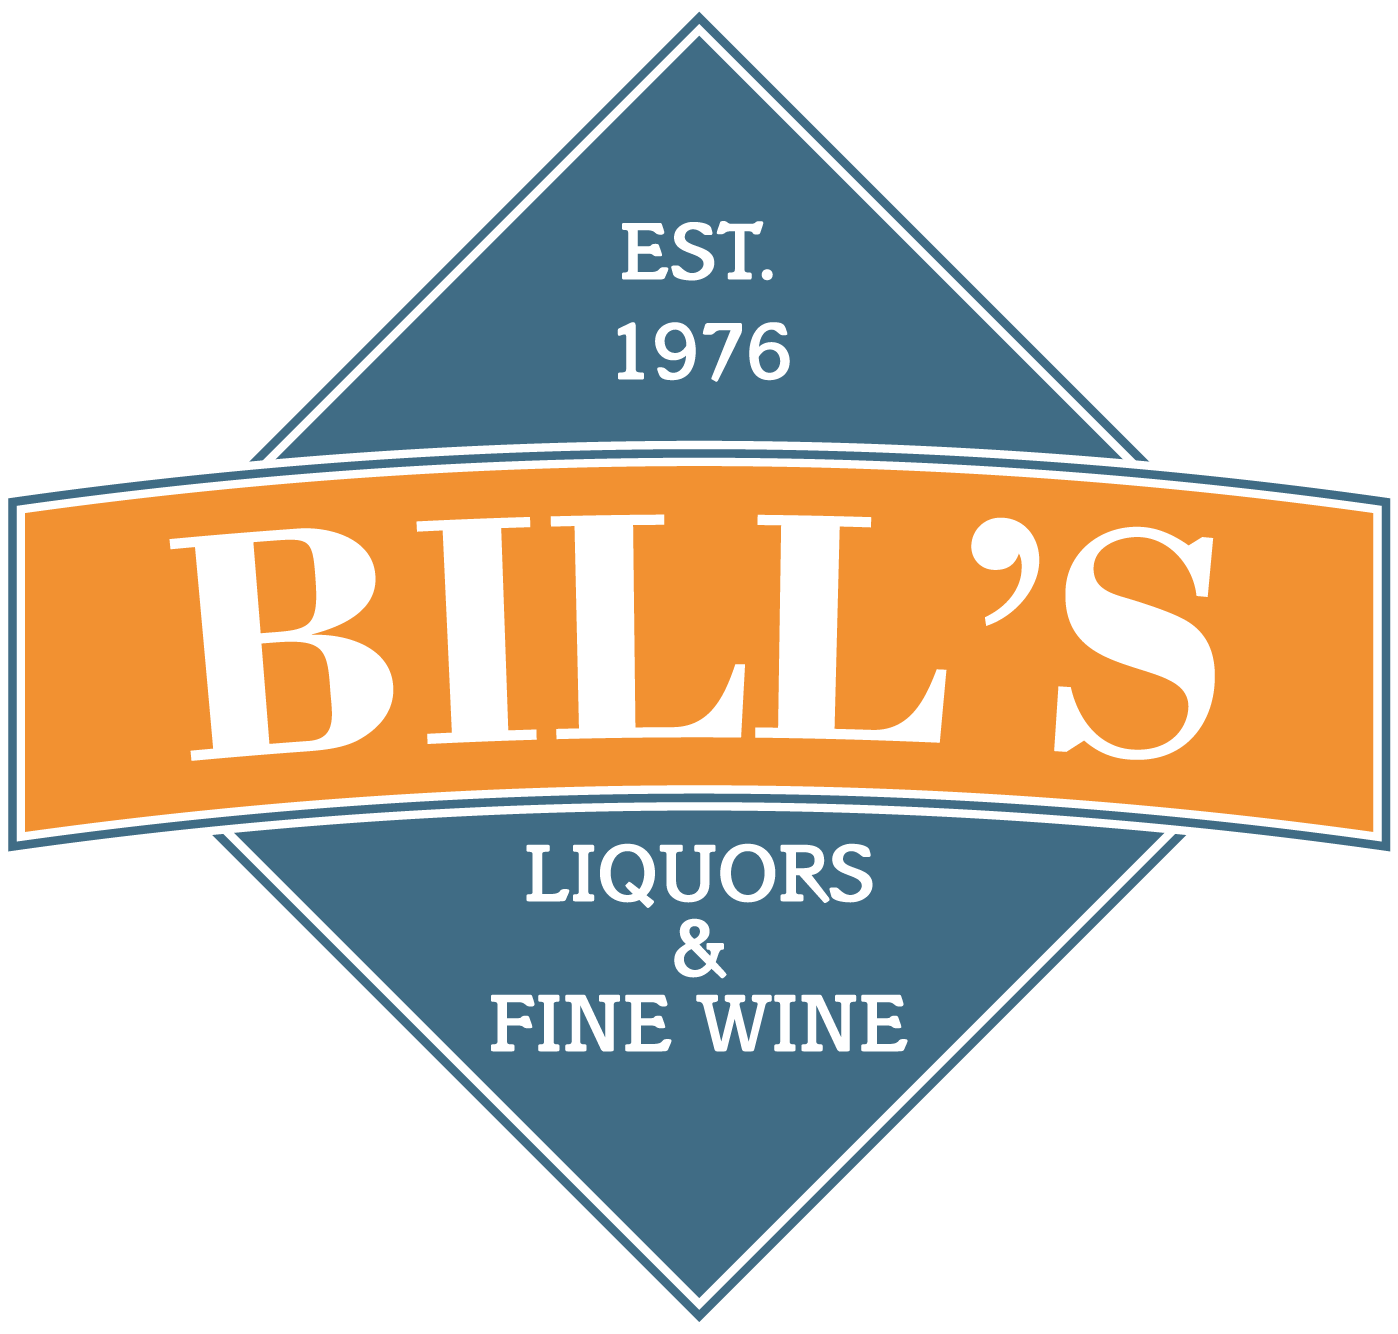 Bill's Liquors & Fine Wine - Bills Liquors (1398x1334), Png Download